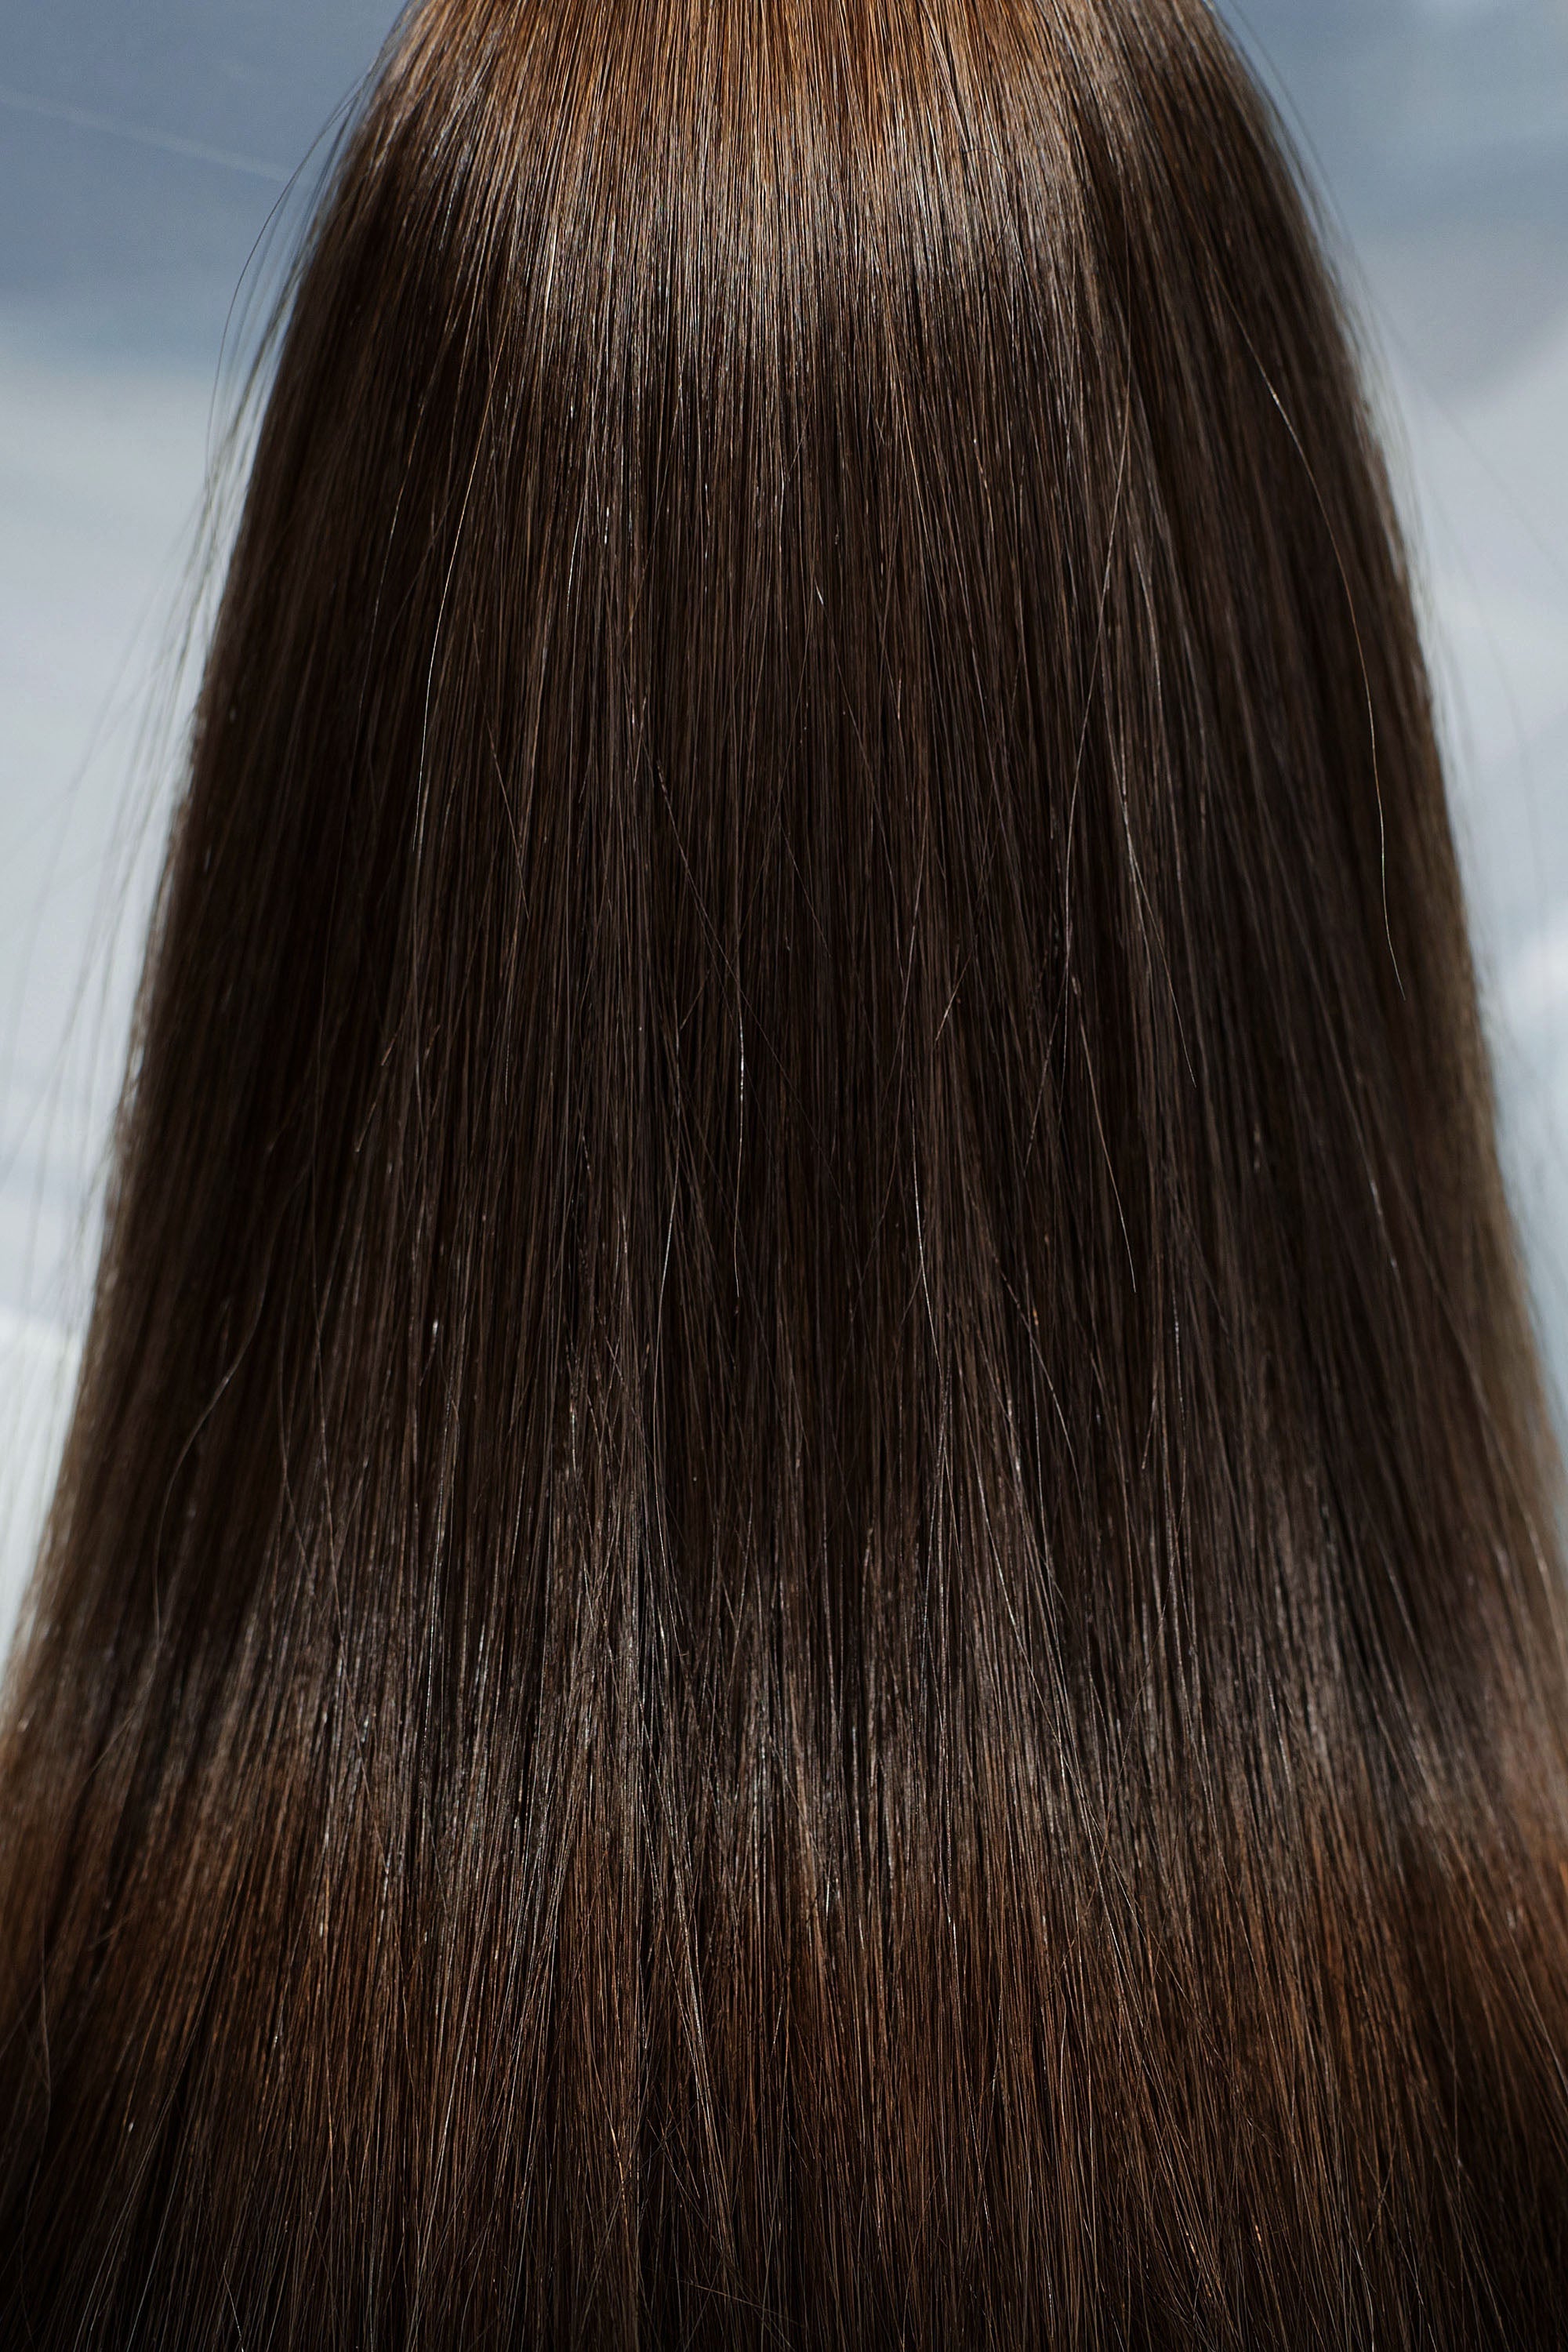 Behair professional Keratin Tip "Premium" 16" (40cm) Natural Straight Light Brown #4 - 25g (Micro - 0.5g each pcs) hair extensions